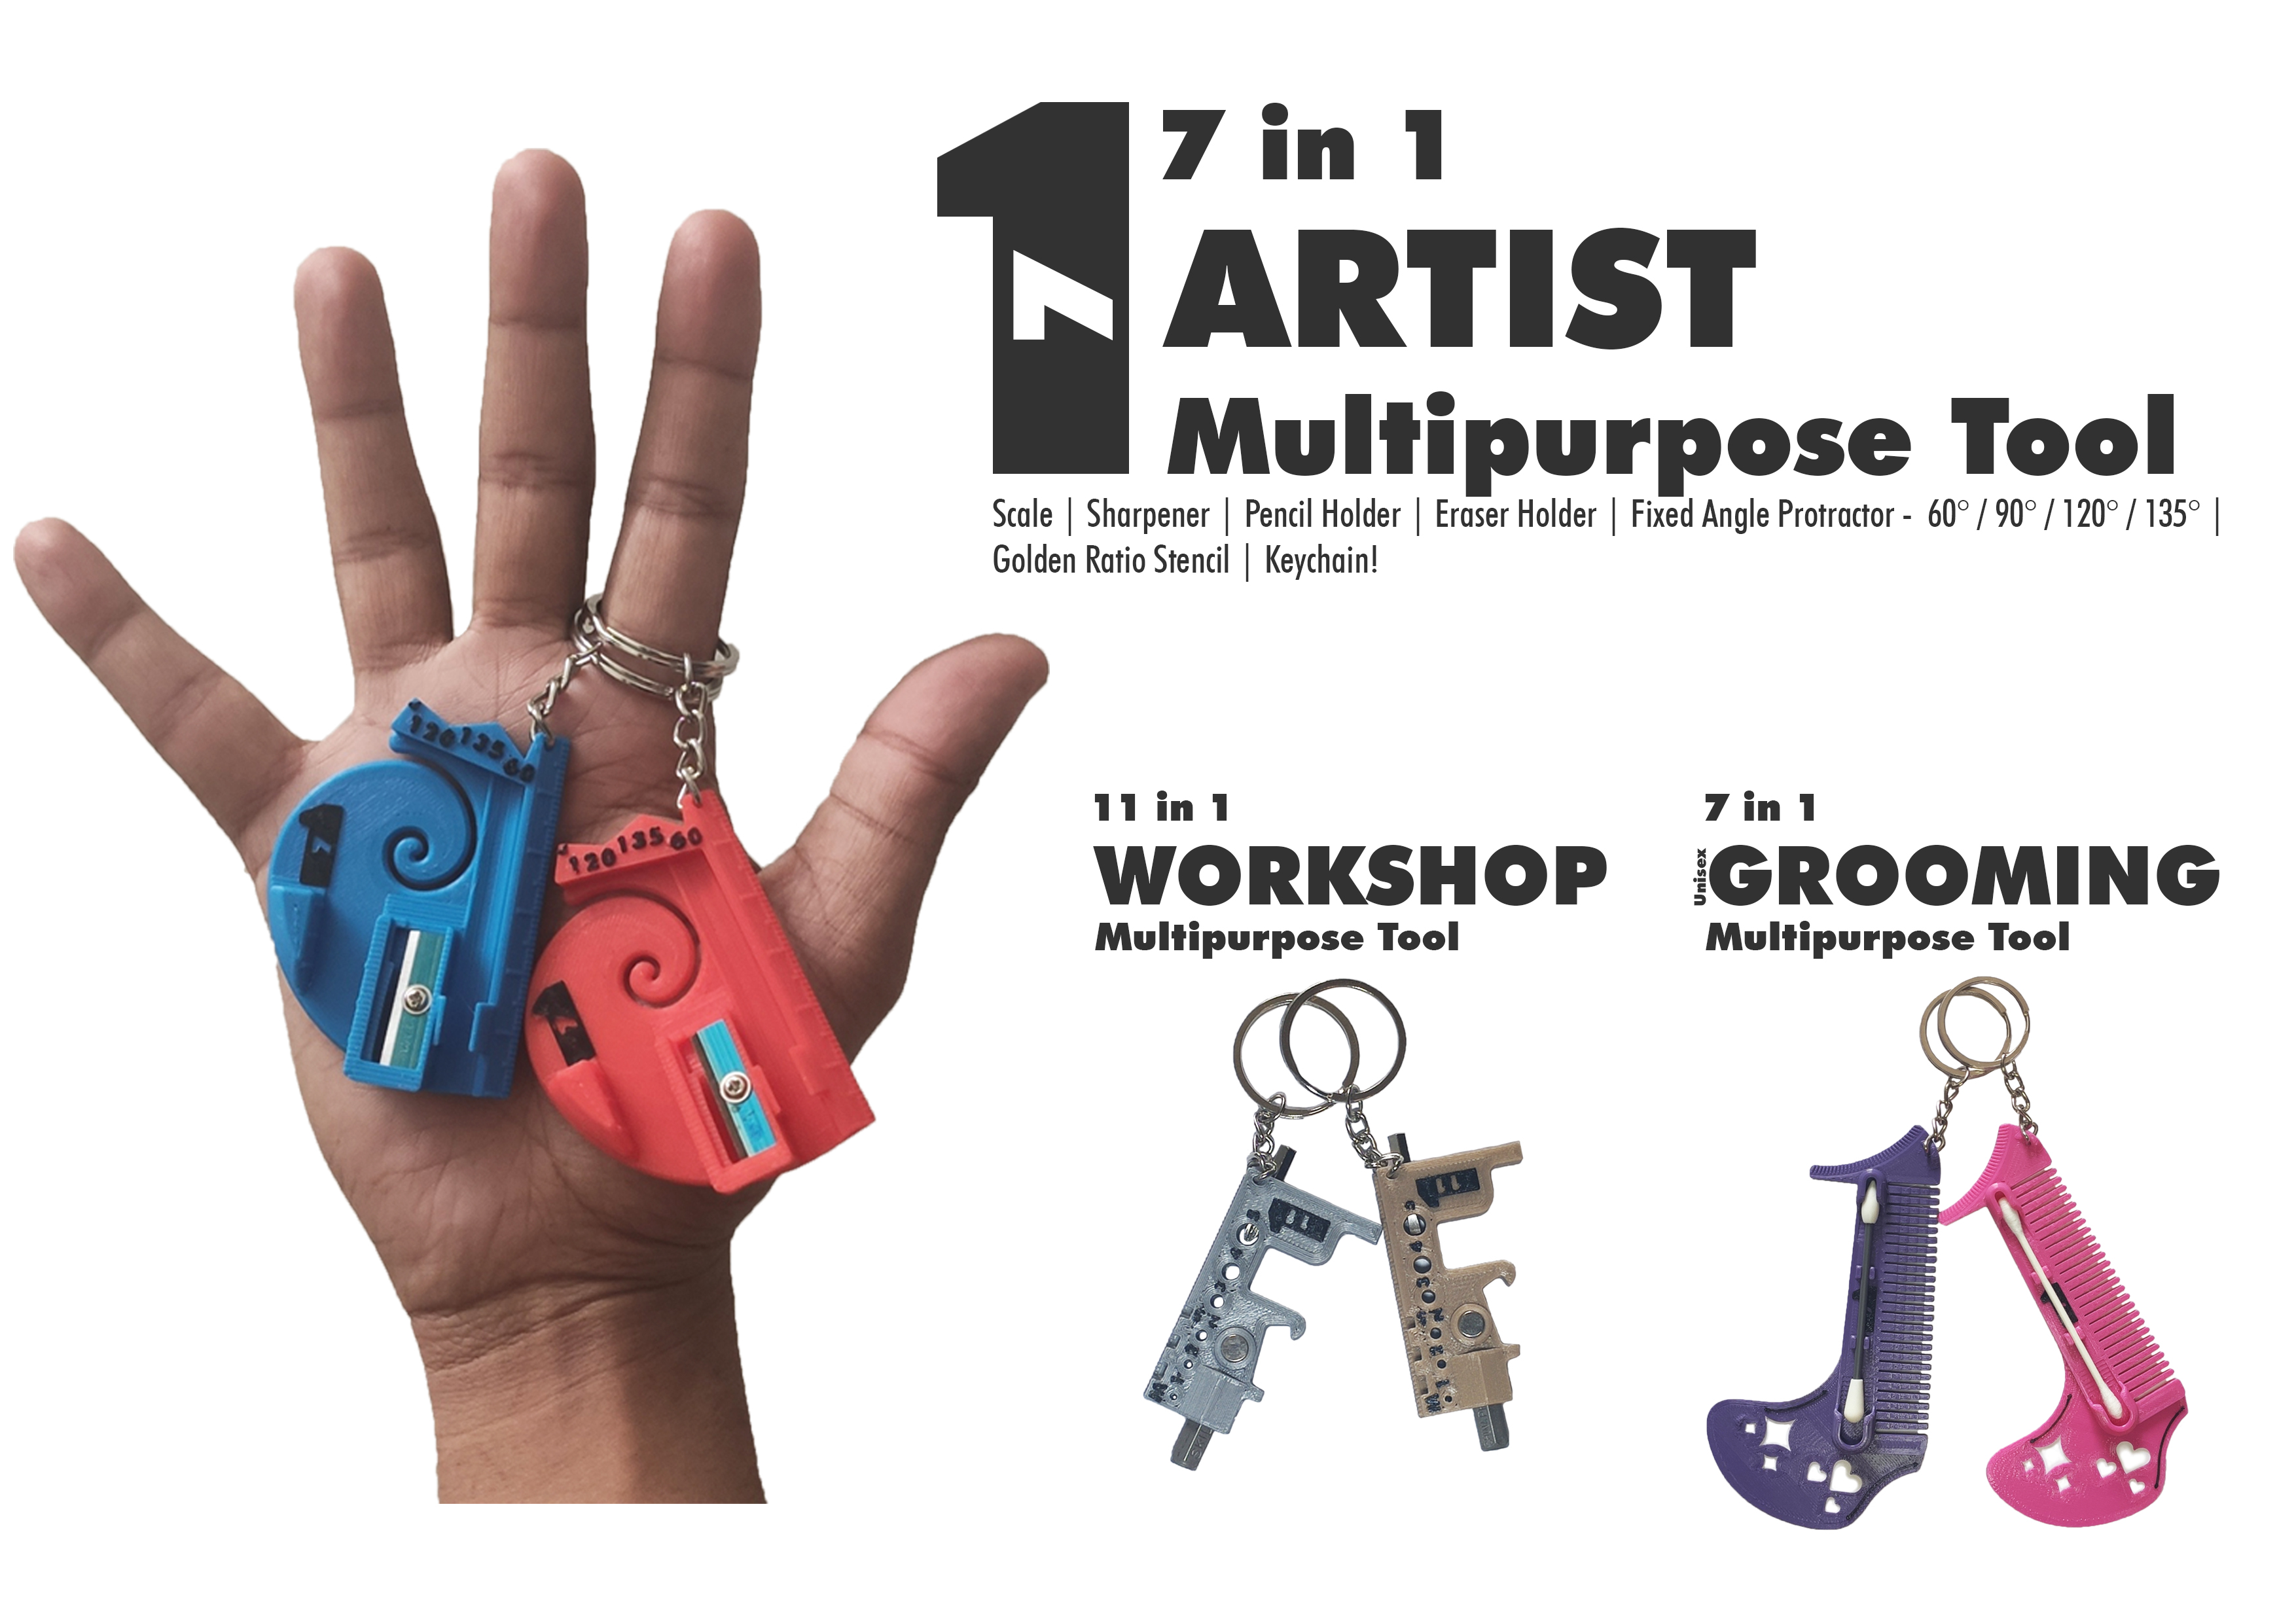 7 in 1 - Artist Multipurpose Tool